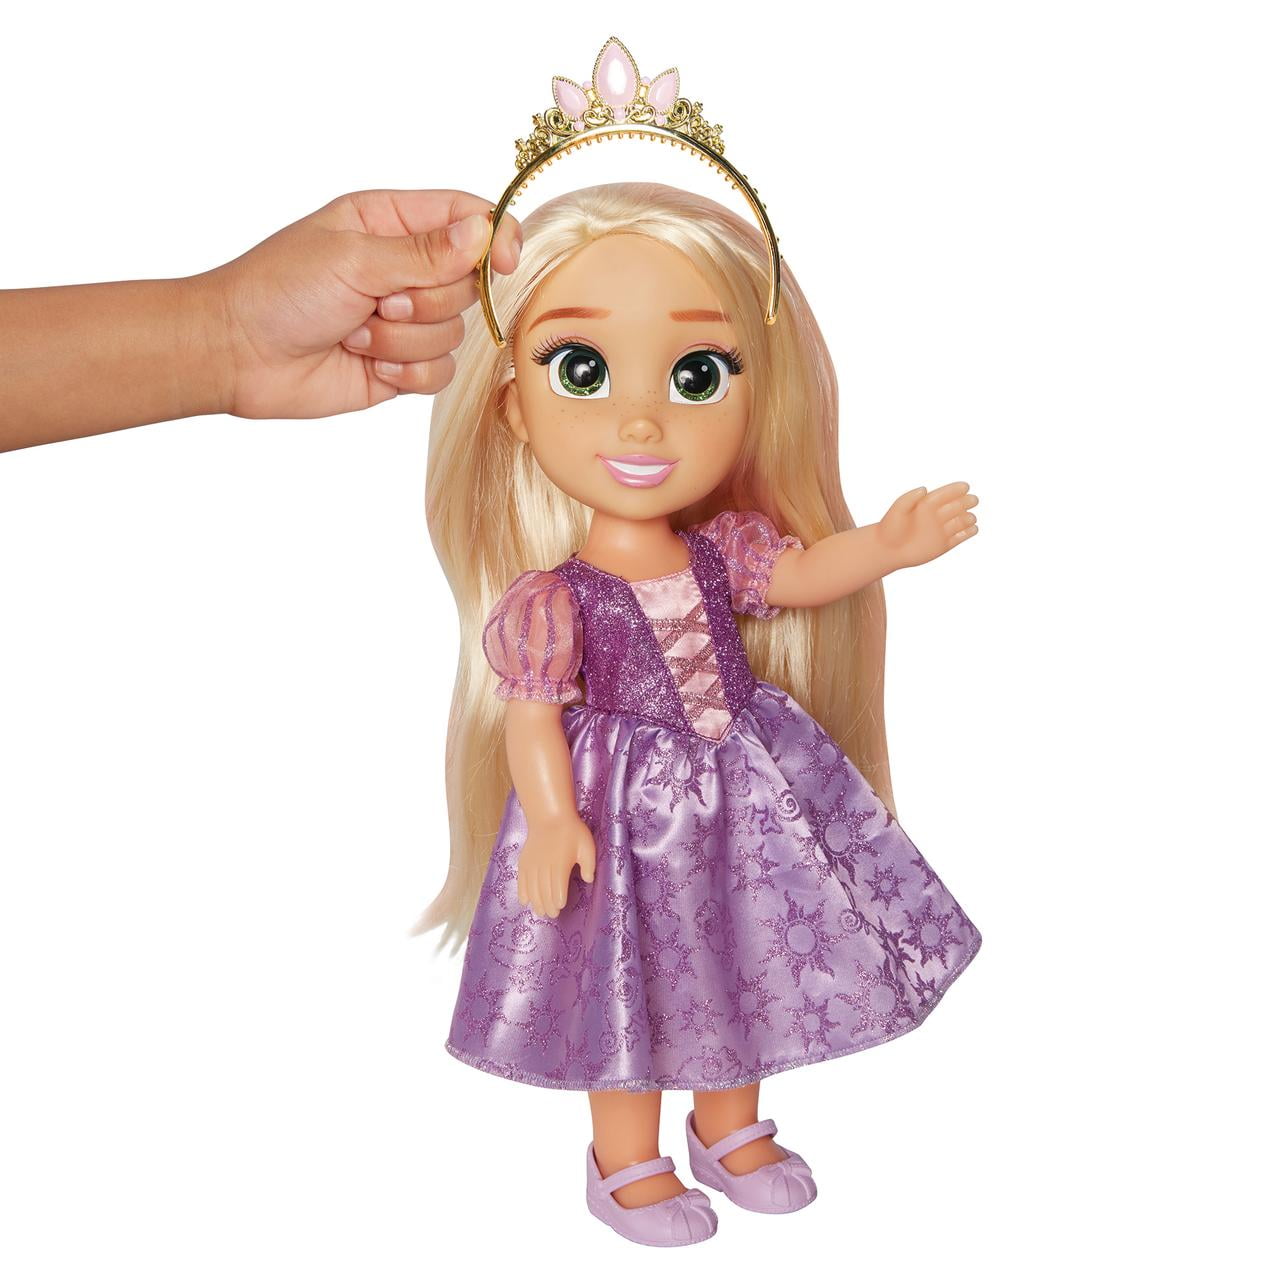 Disney Princess My Friend Rapunzel Doll, 1 ct - Kroger